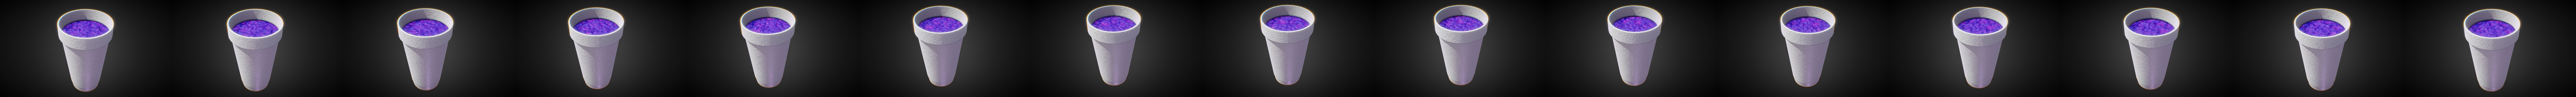 Lean double cup 3d model v2 | 3D model